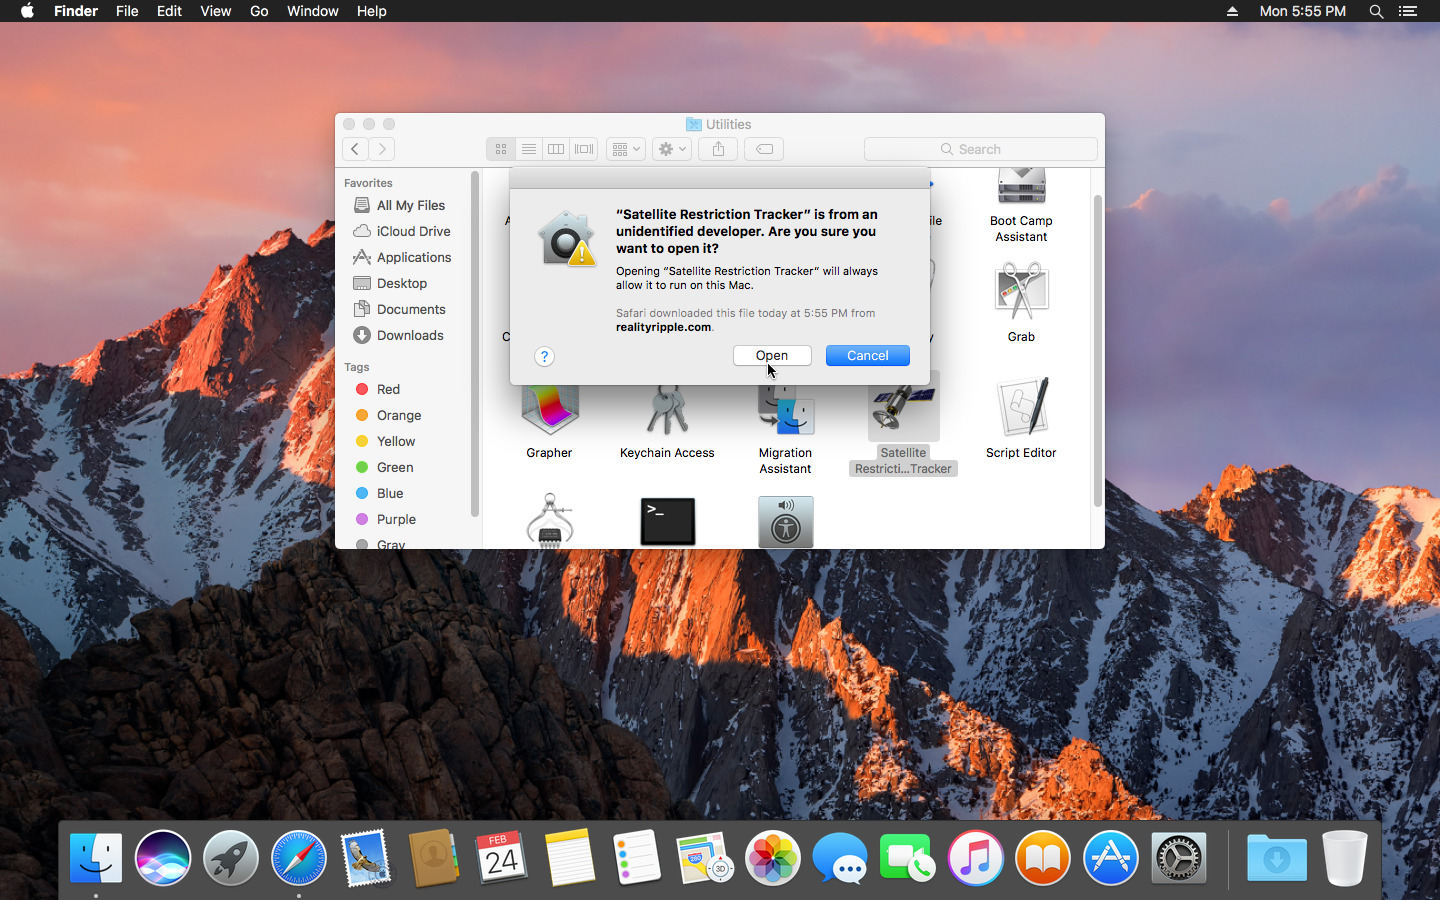 macOS 10.12
🍎